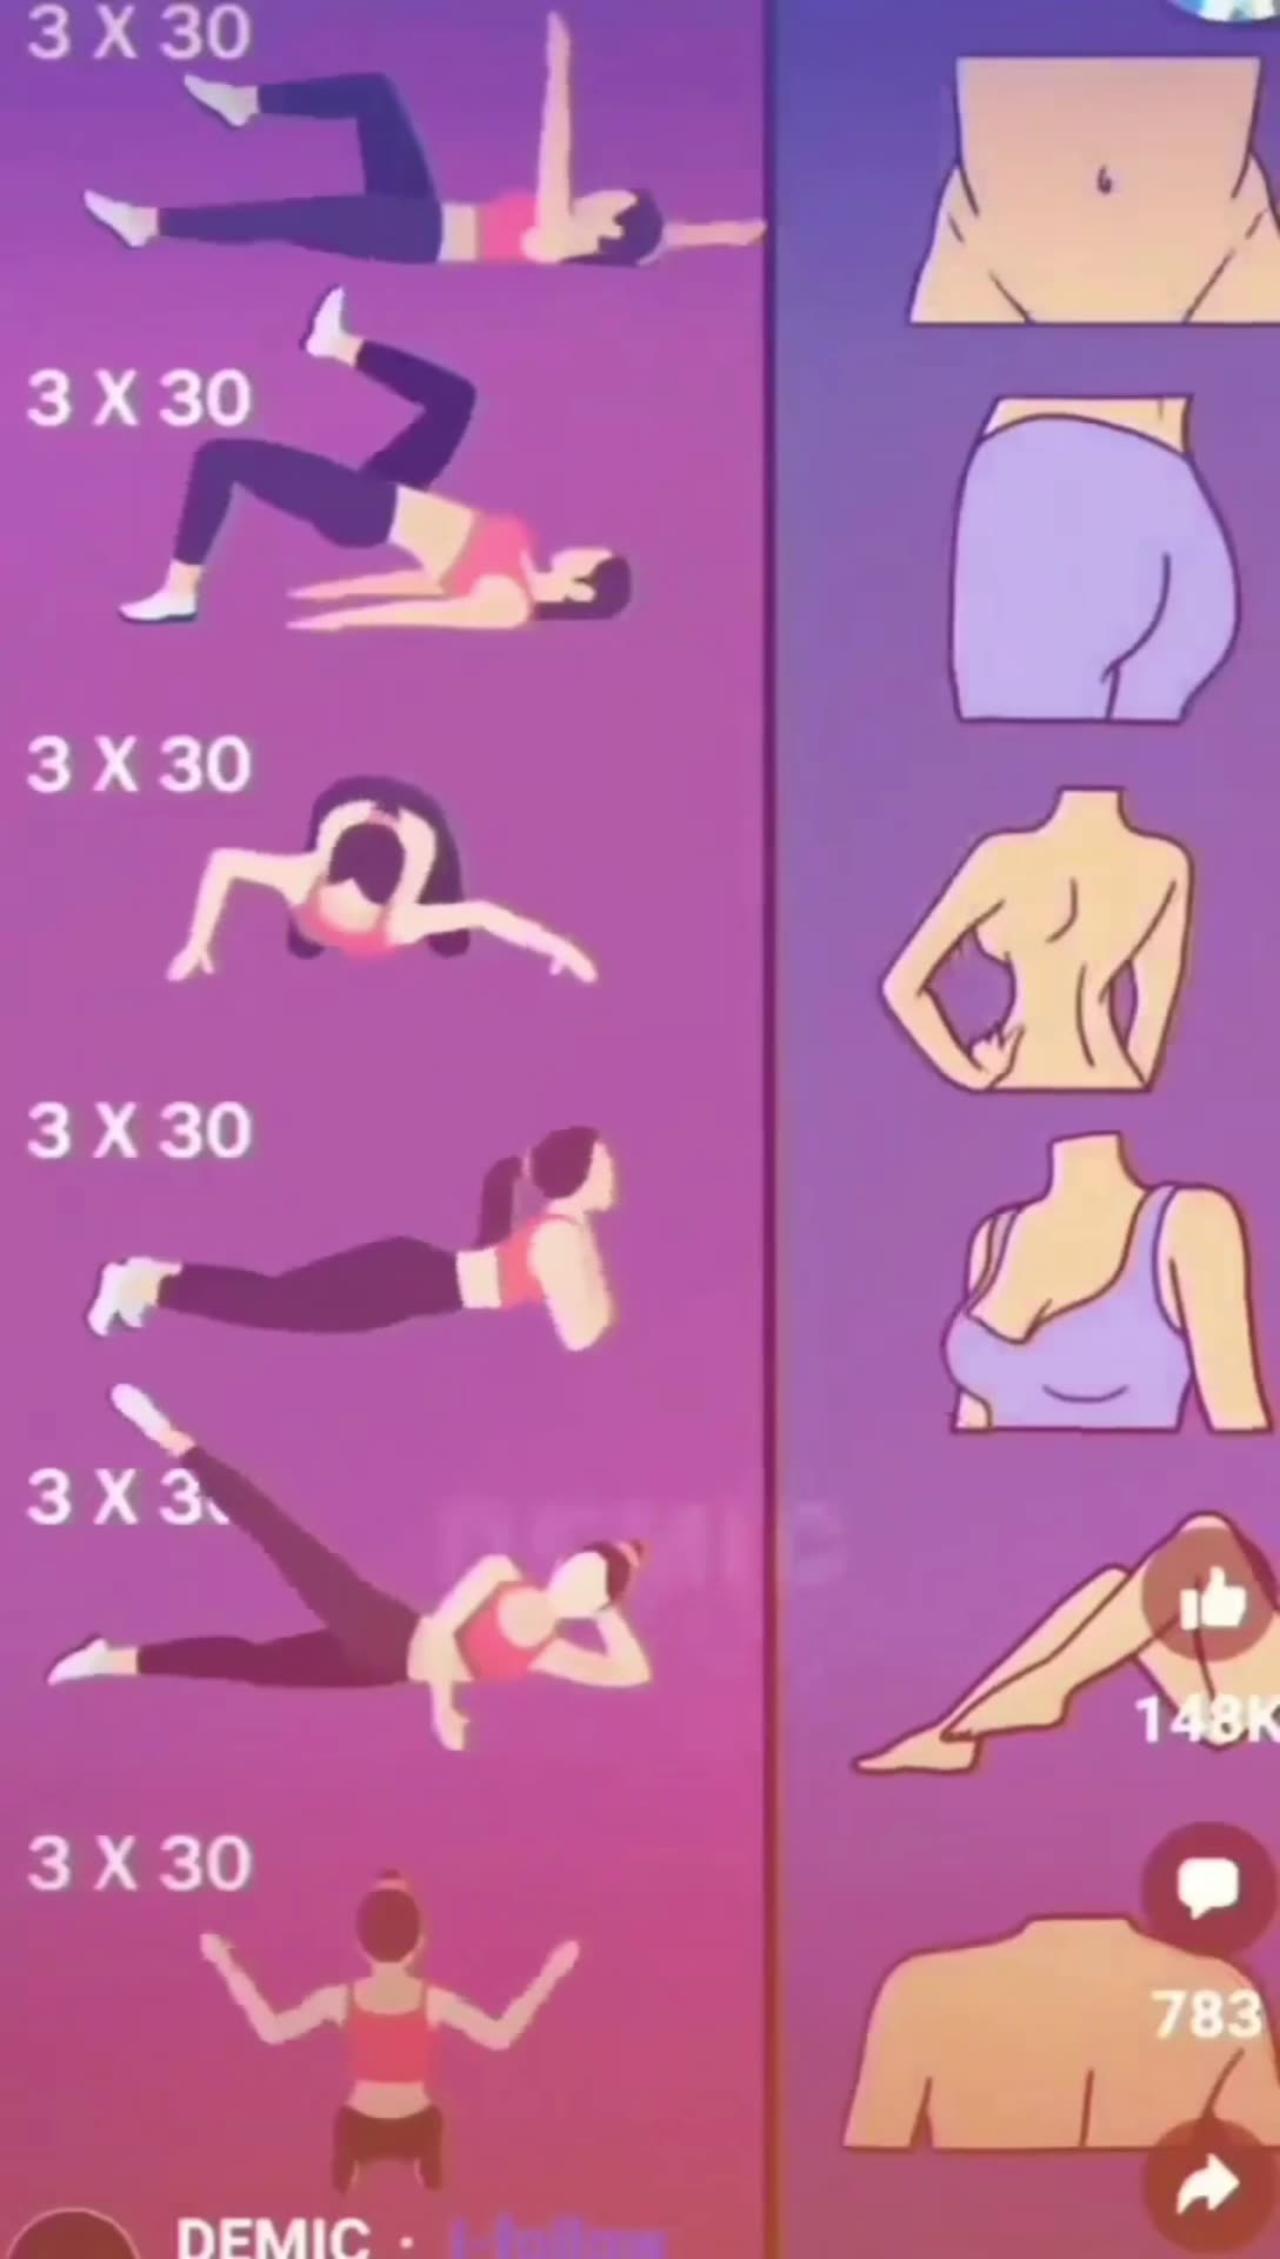 Full body workout